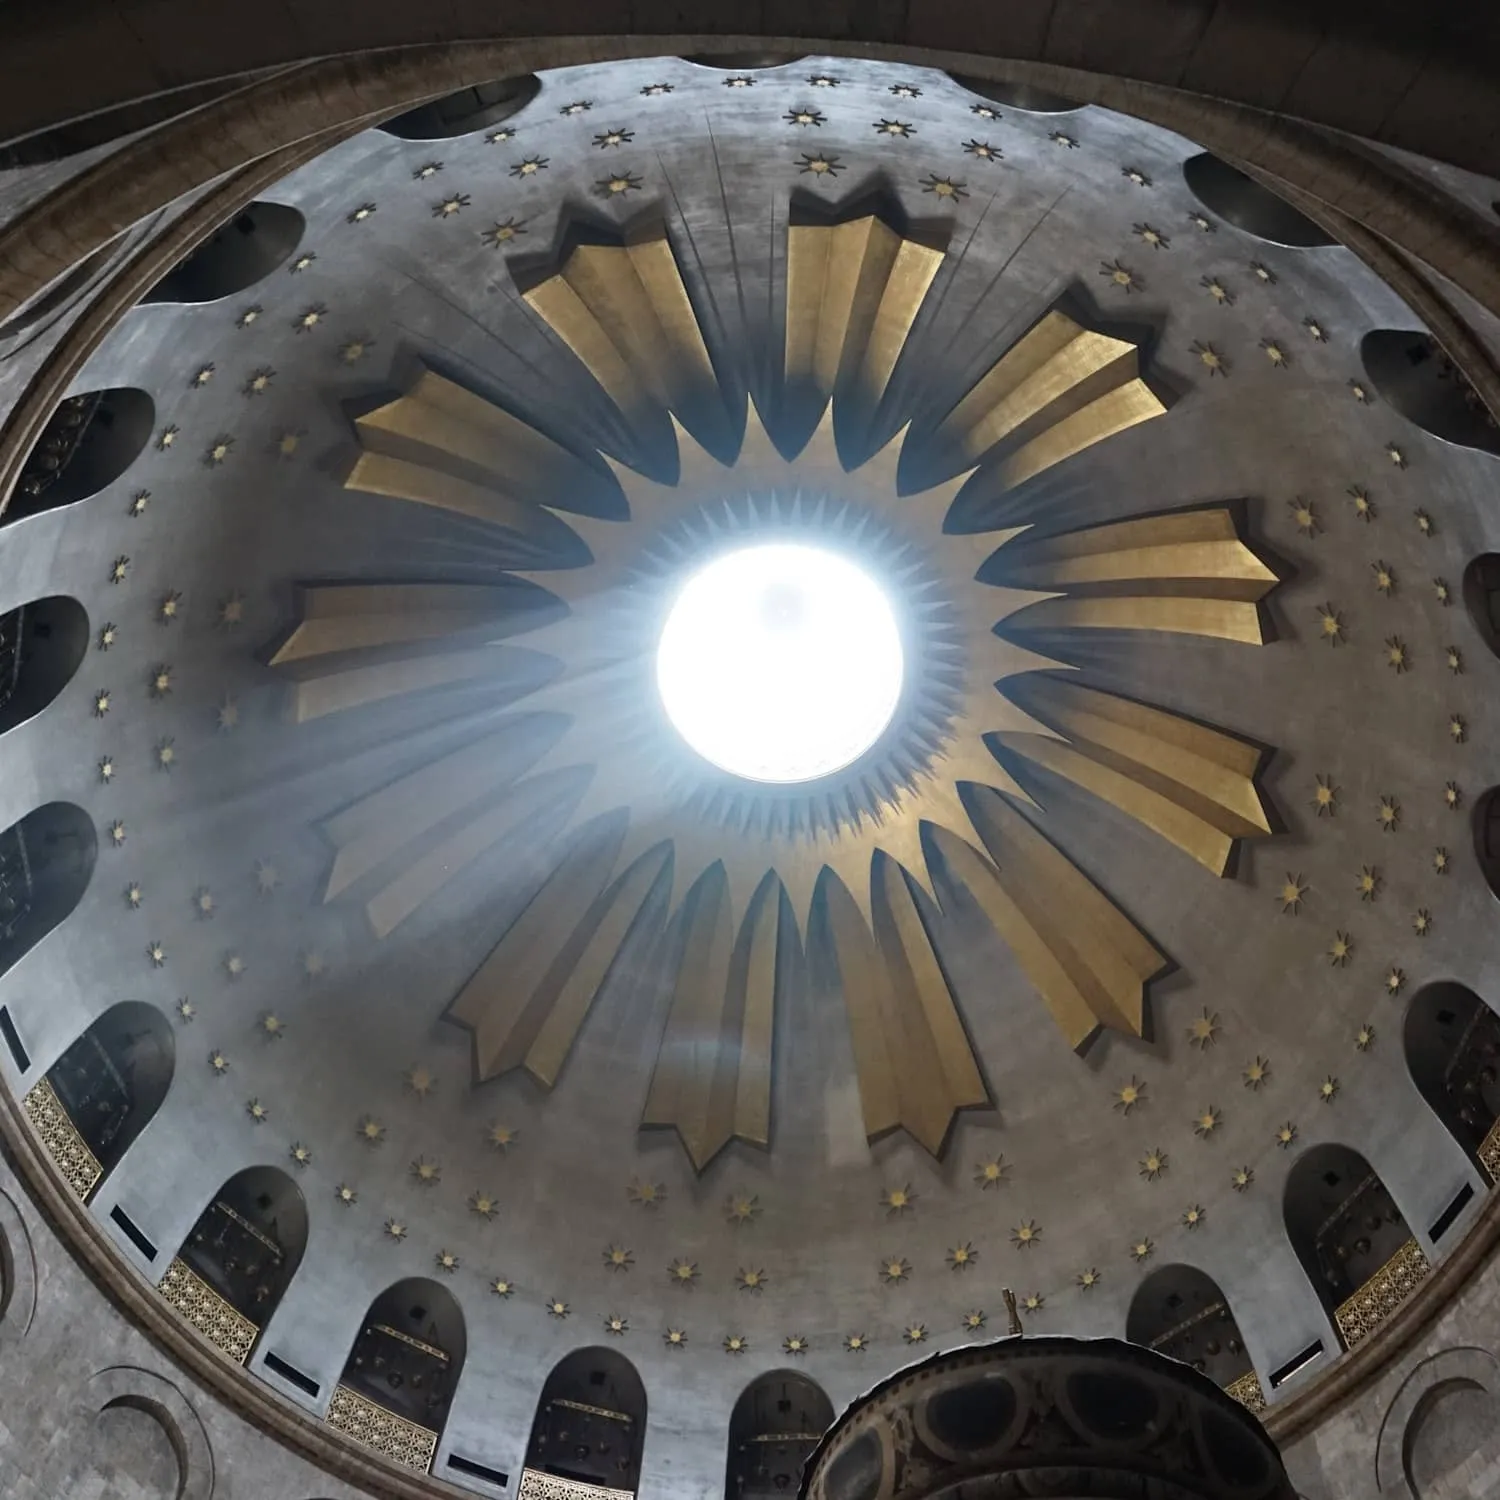 Hagia Sophia architectural dome ceiling